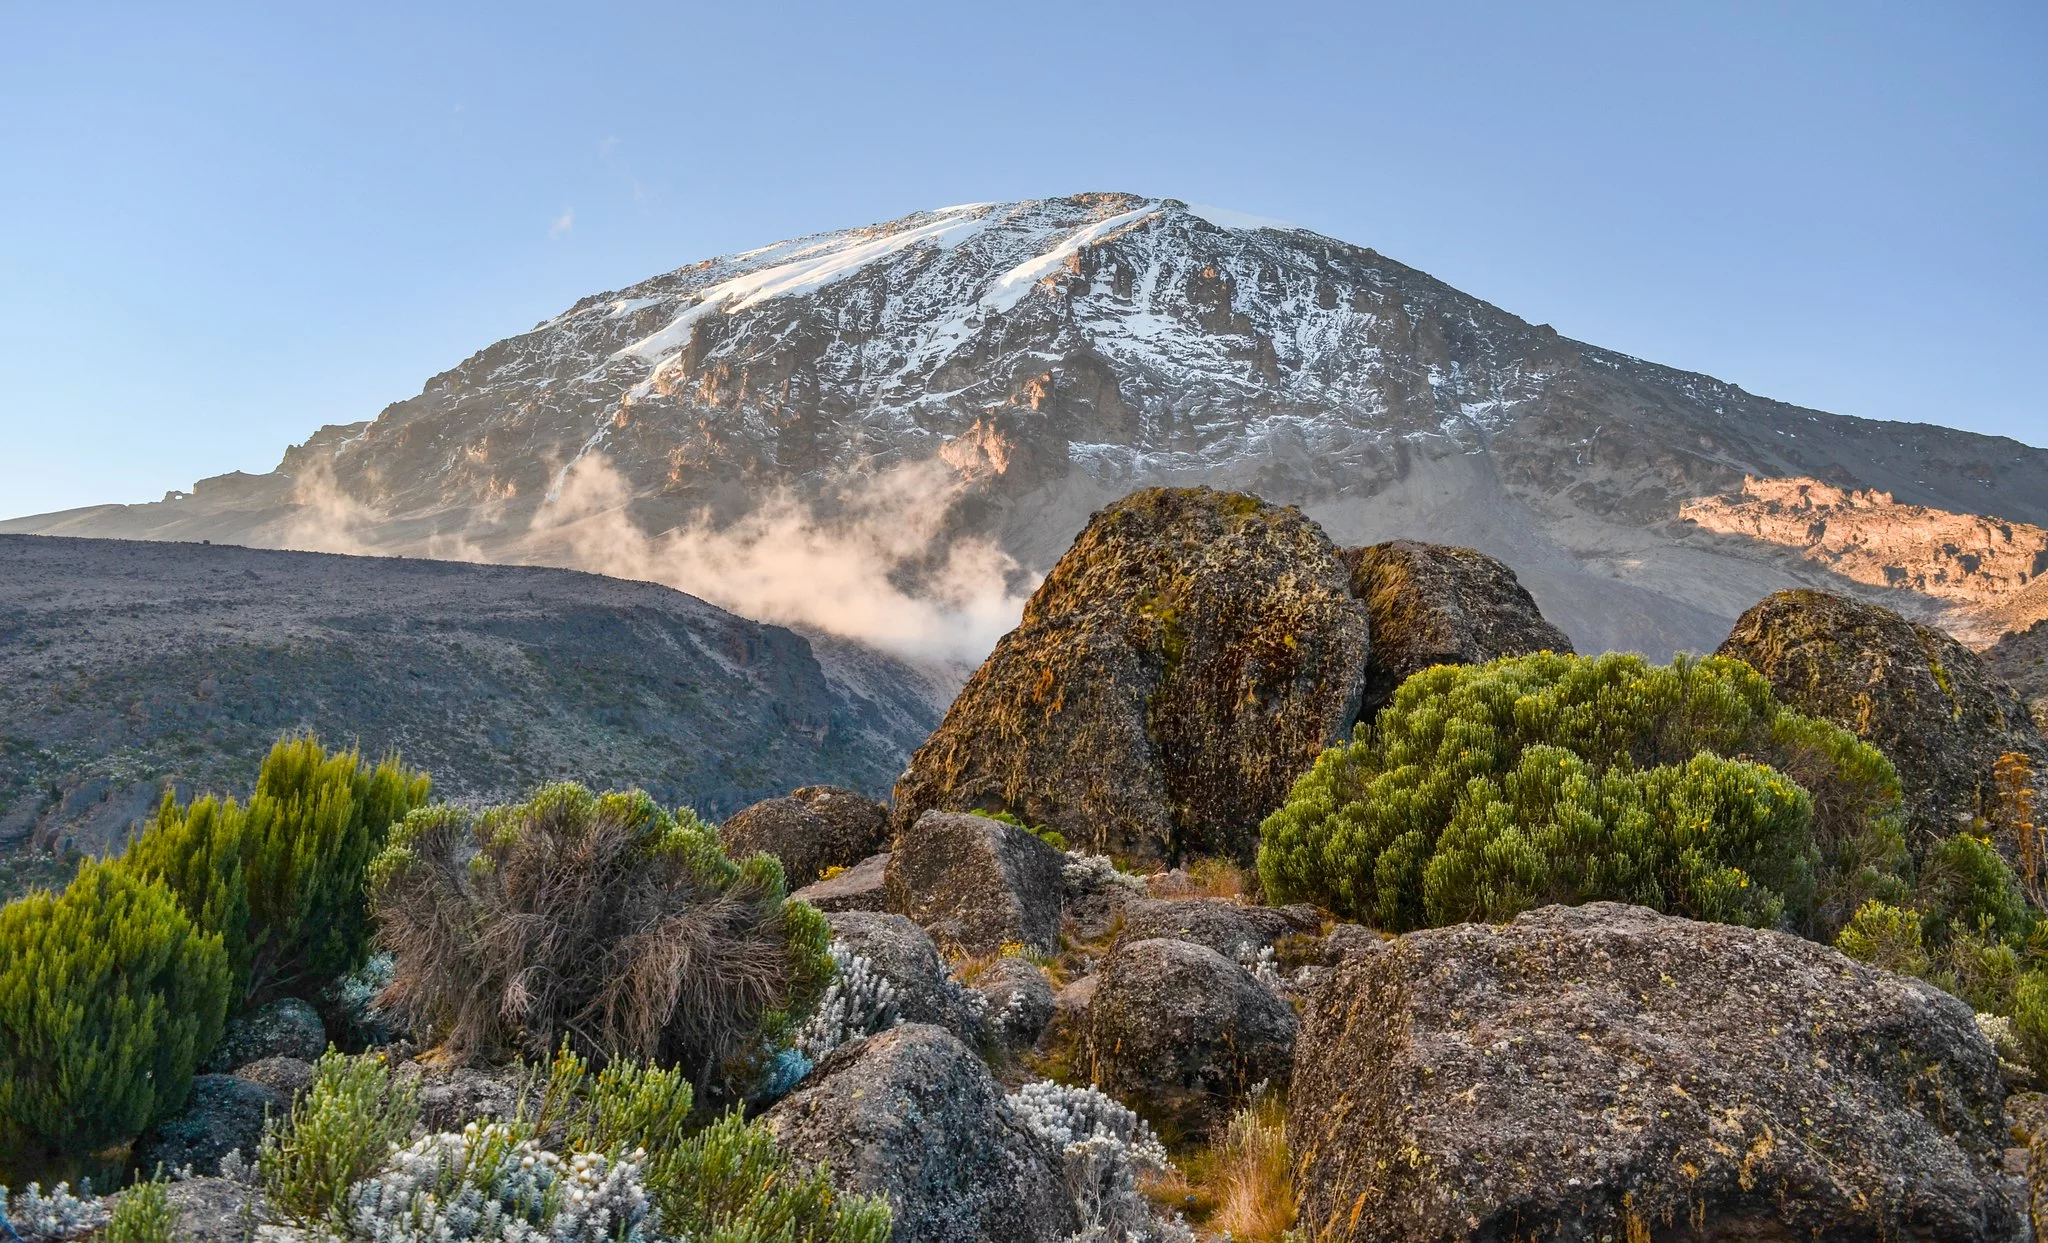 Kibo Peak, Mount Kilimanjaro